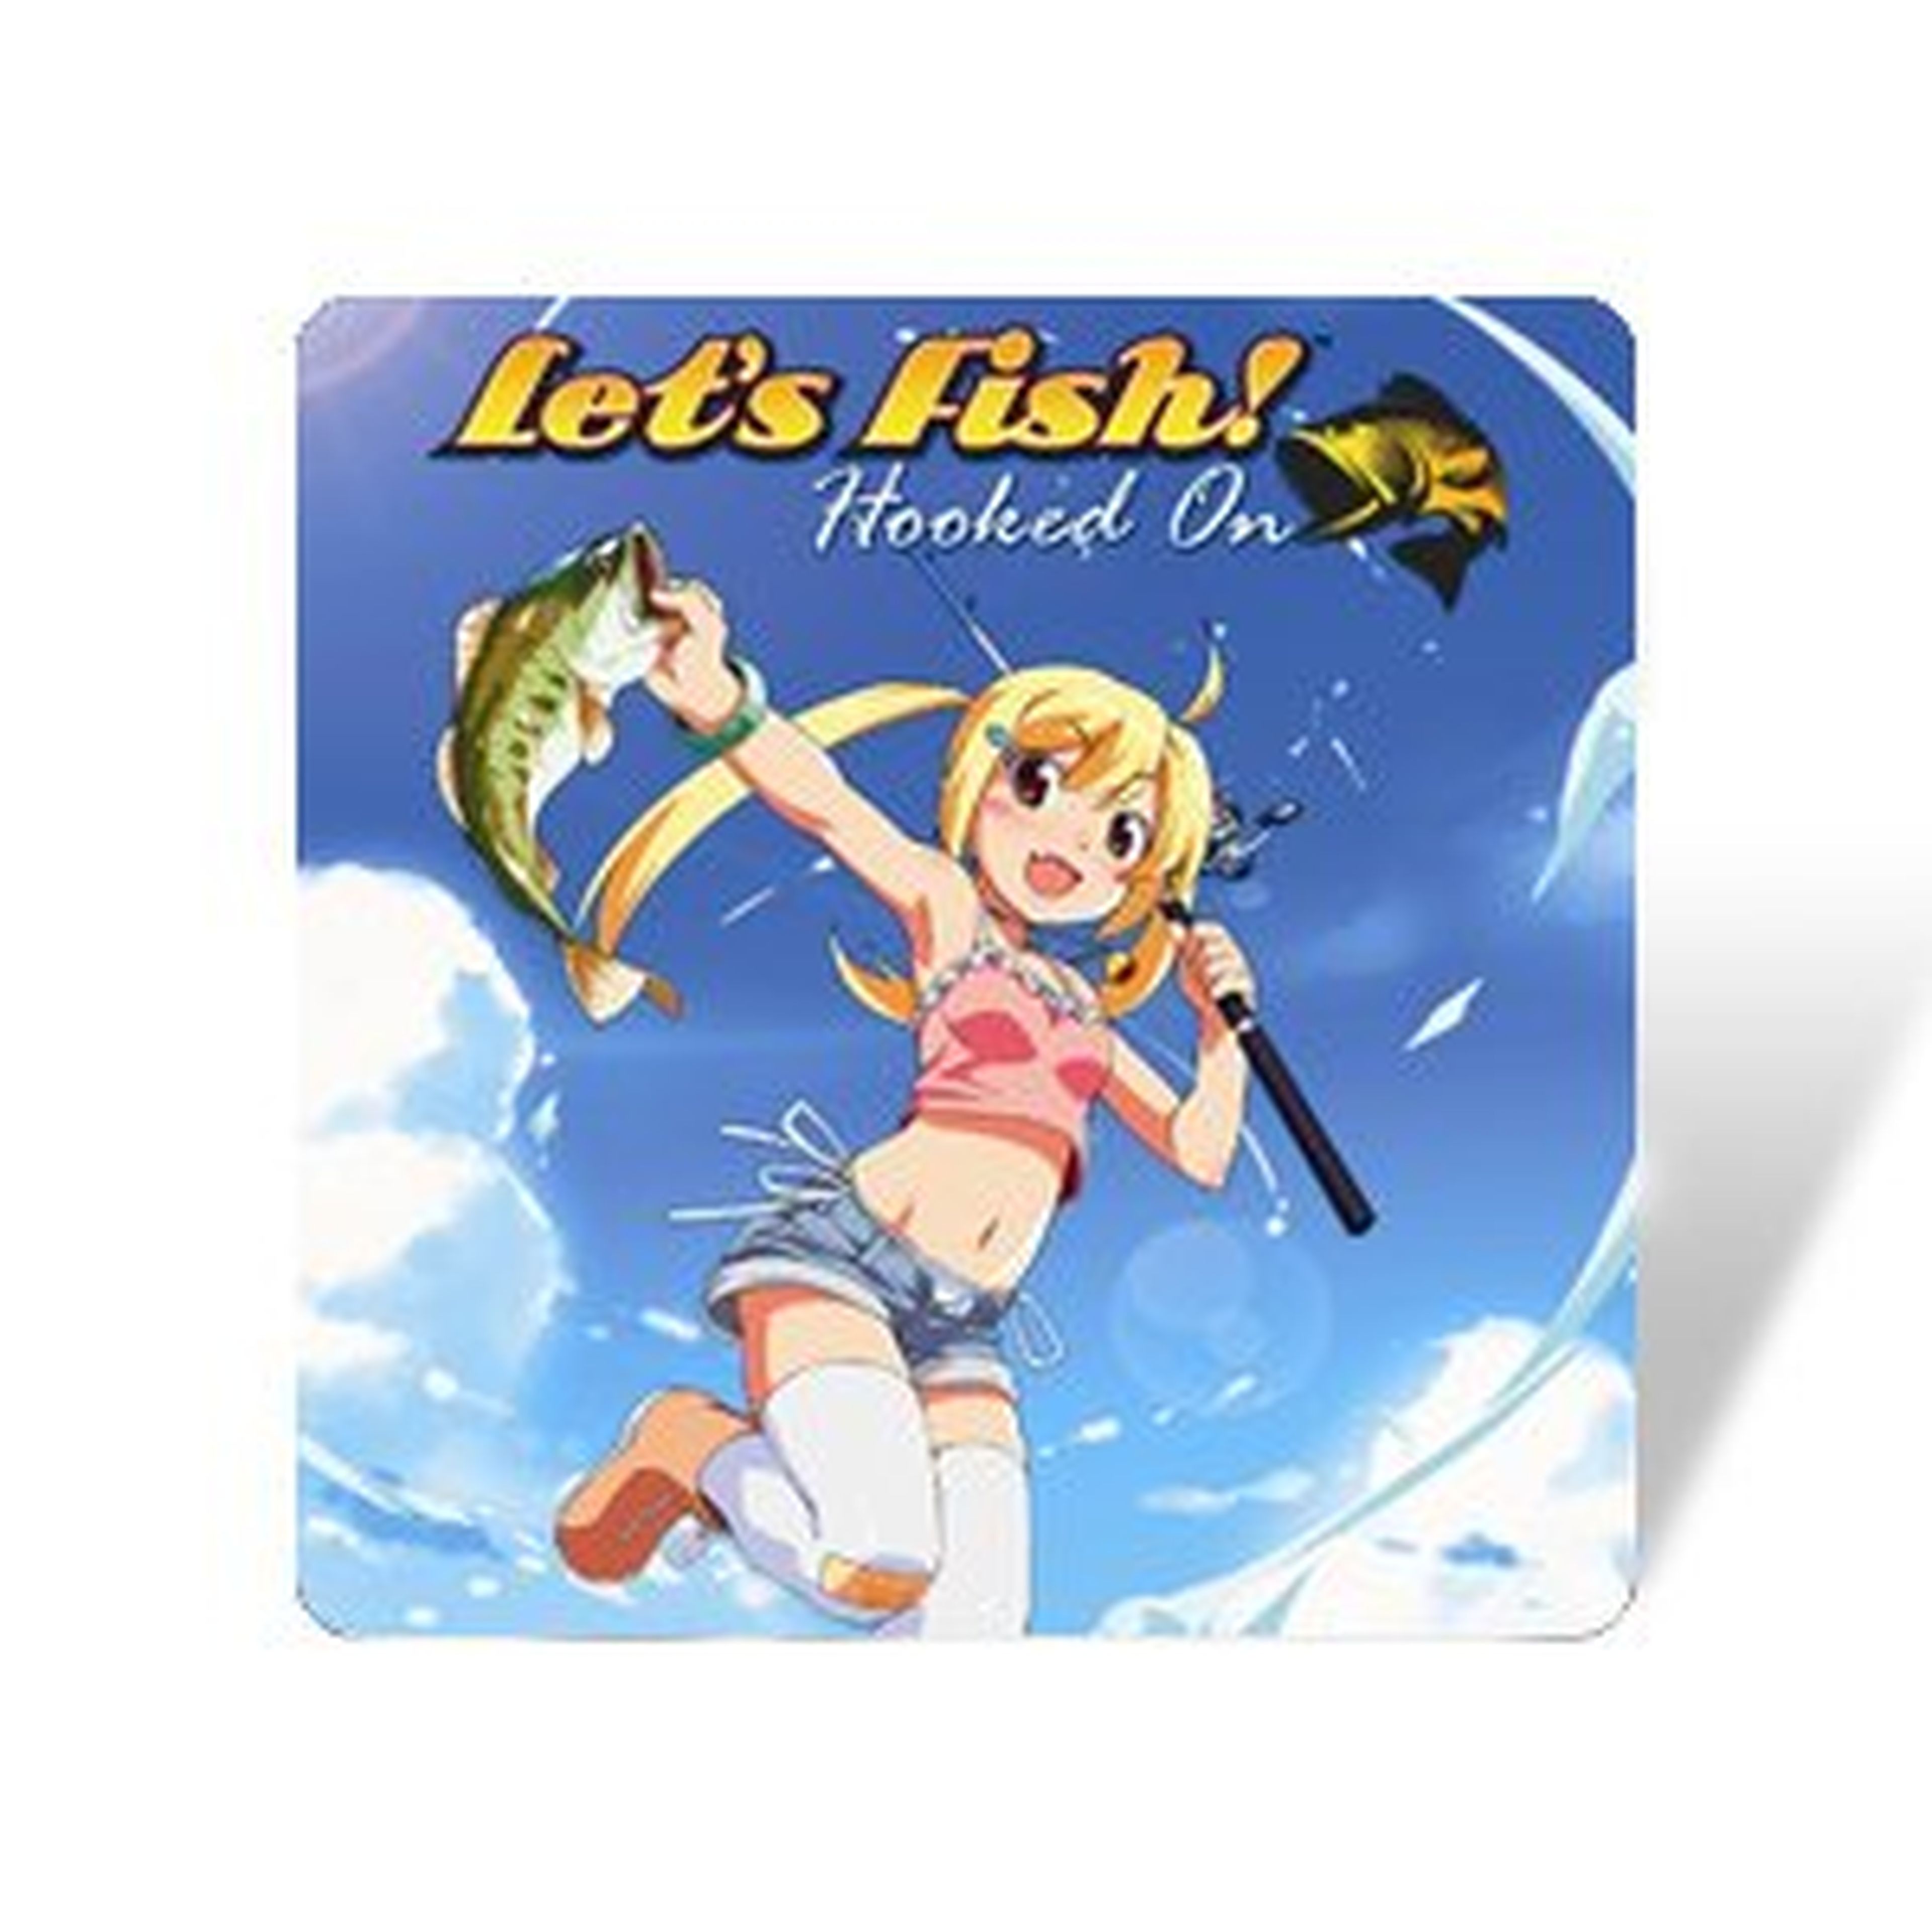 Let's Fish! Hooked On para Vita